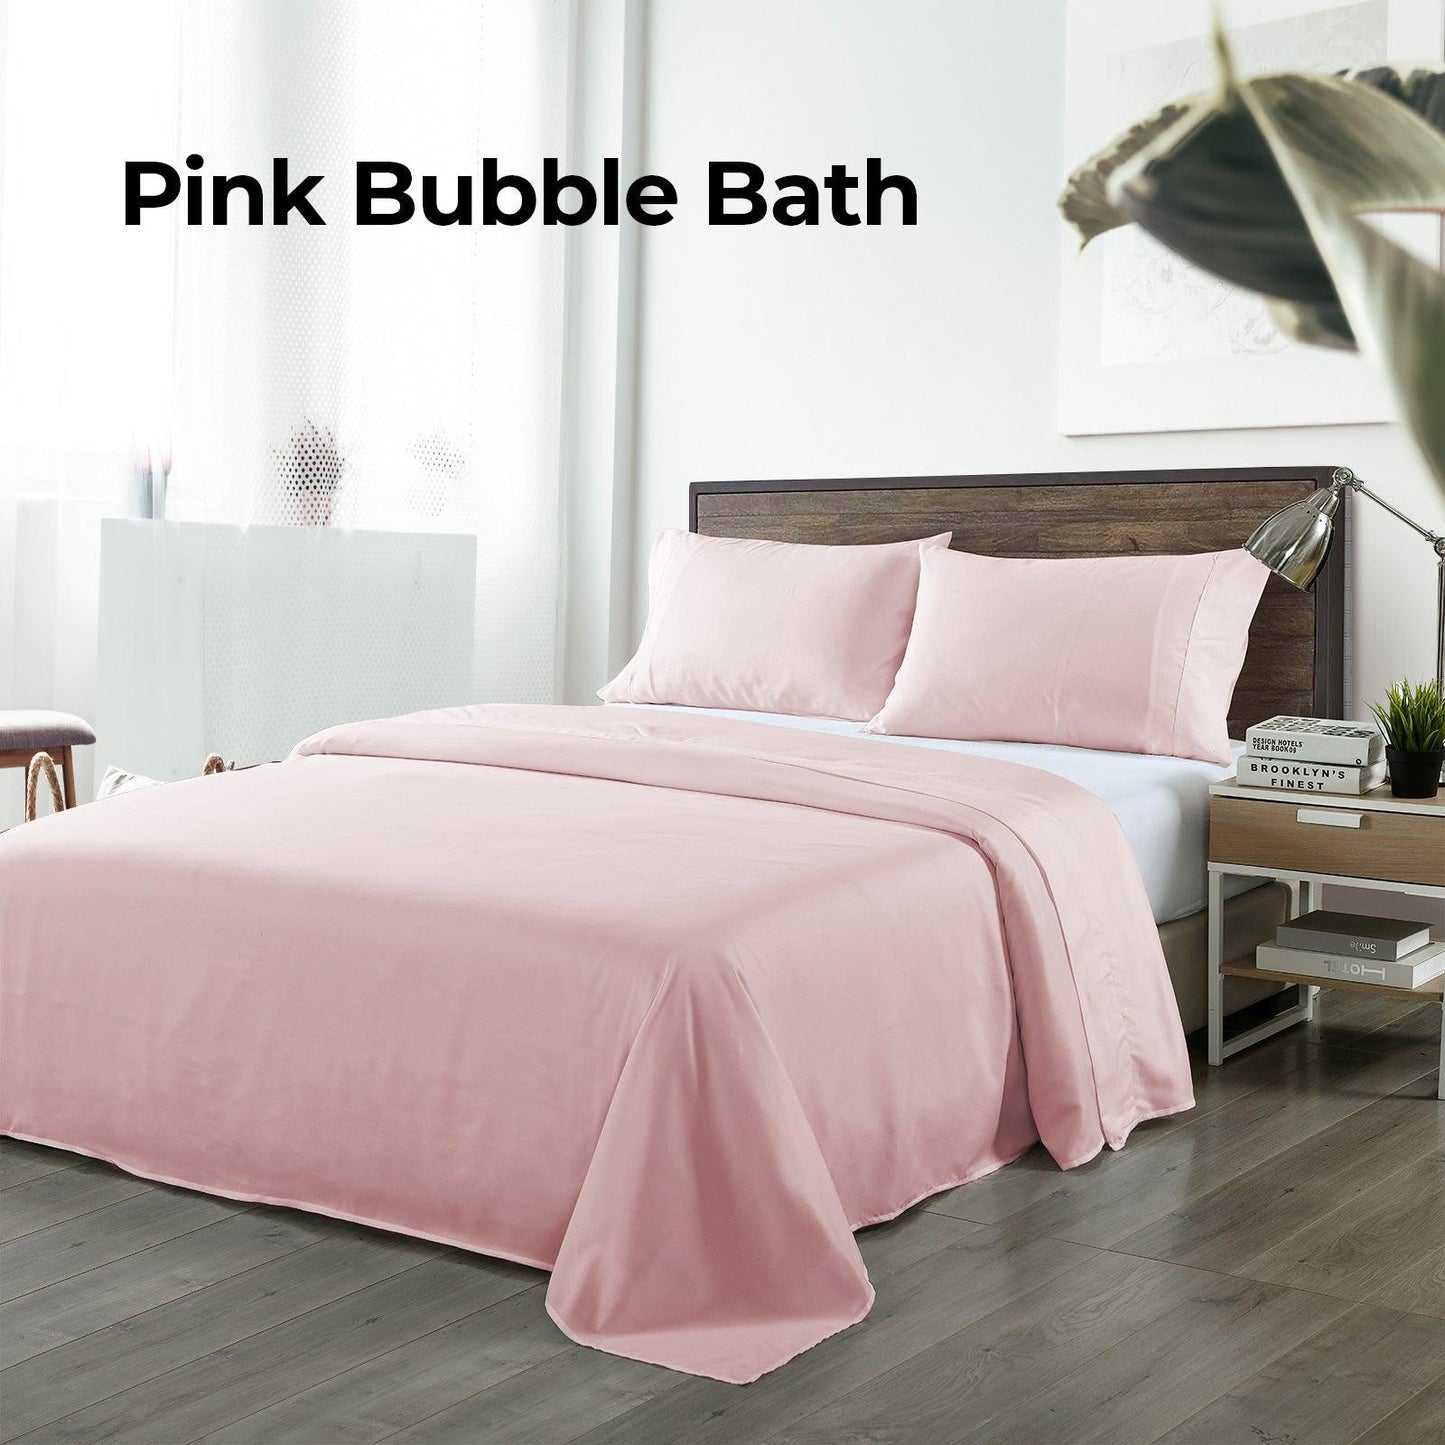 Royal Comfort Bamboo Blended Sheet & Pillowcases Set 1000TC Ultra Soft Bedding - King - Bubble Bath